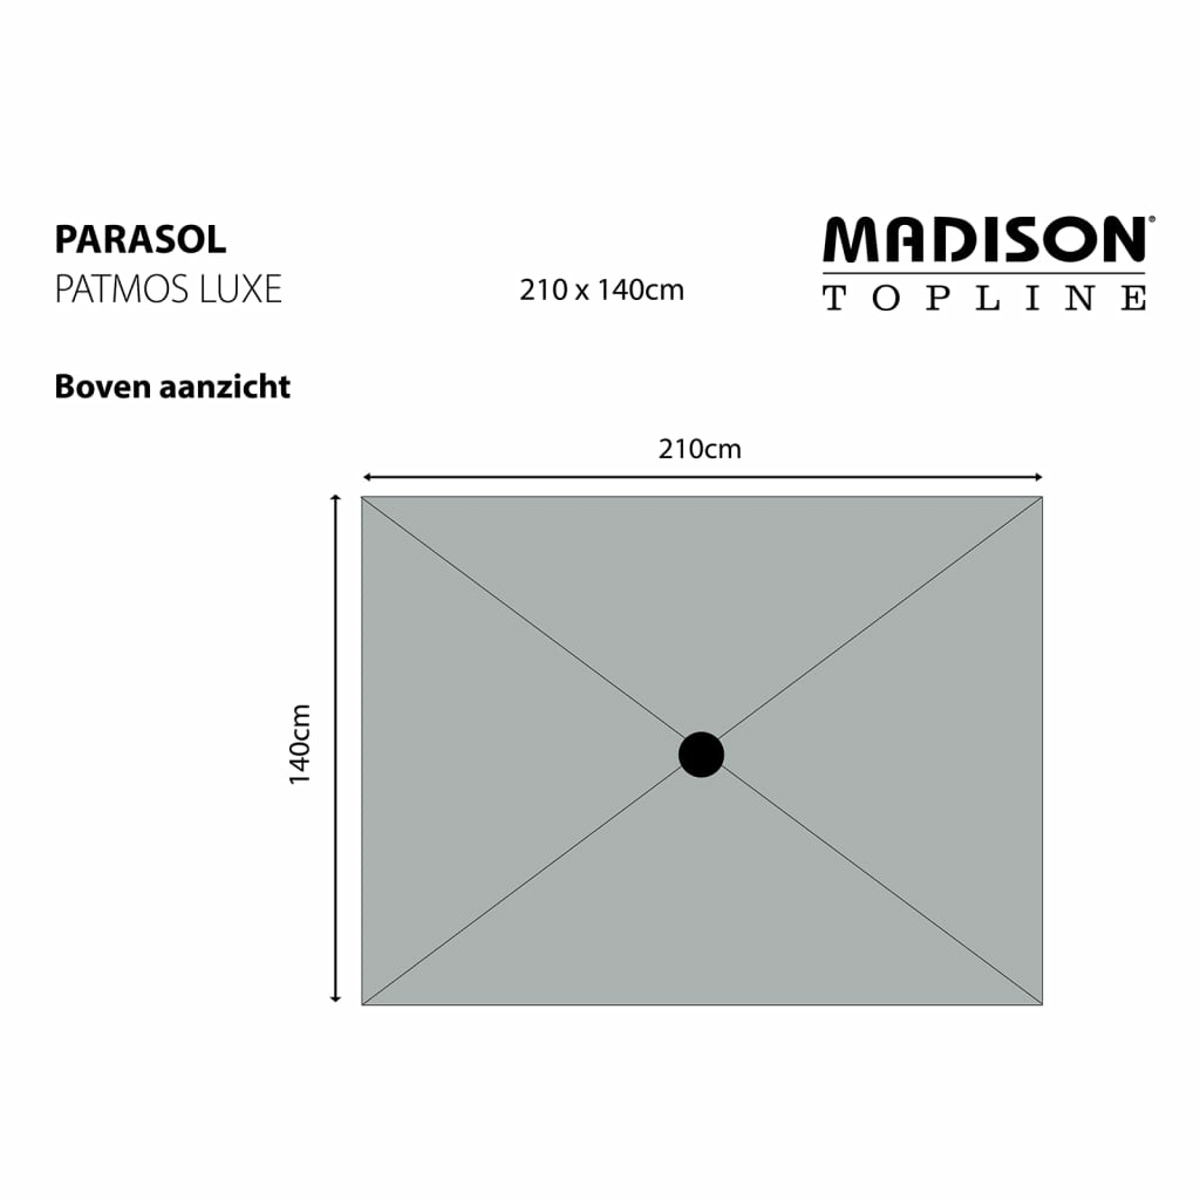 MADISON 418775 Sonnenschirm, Grau